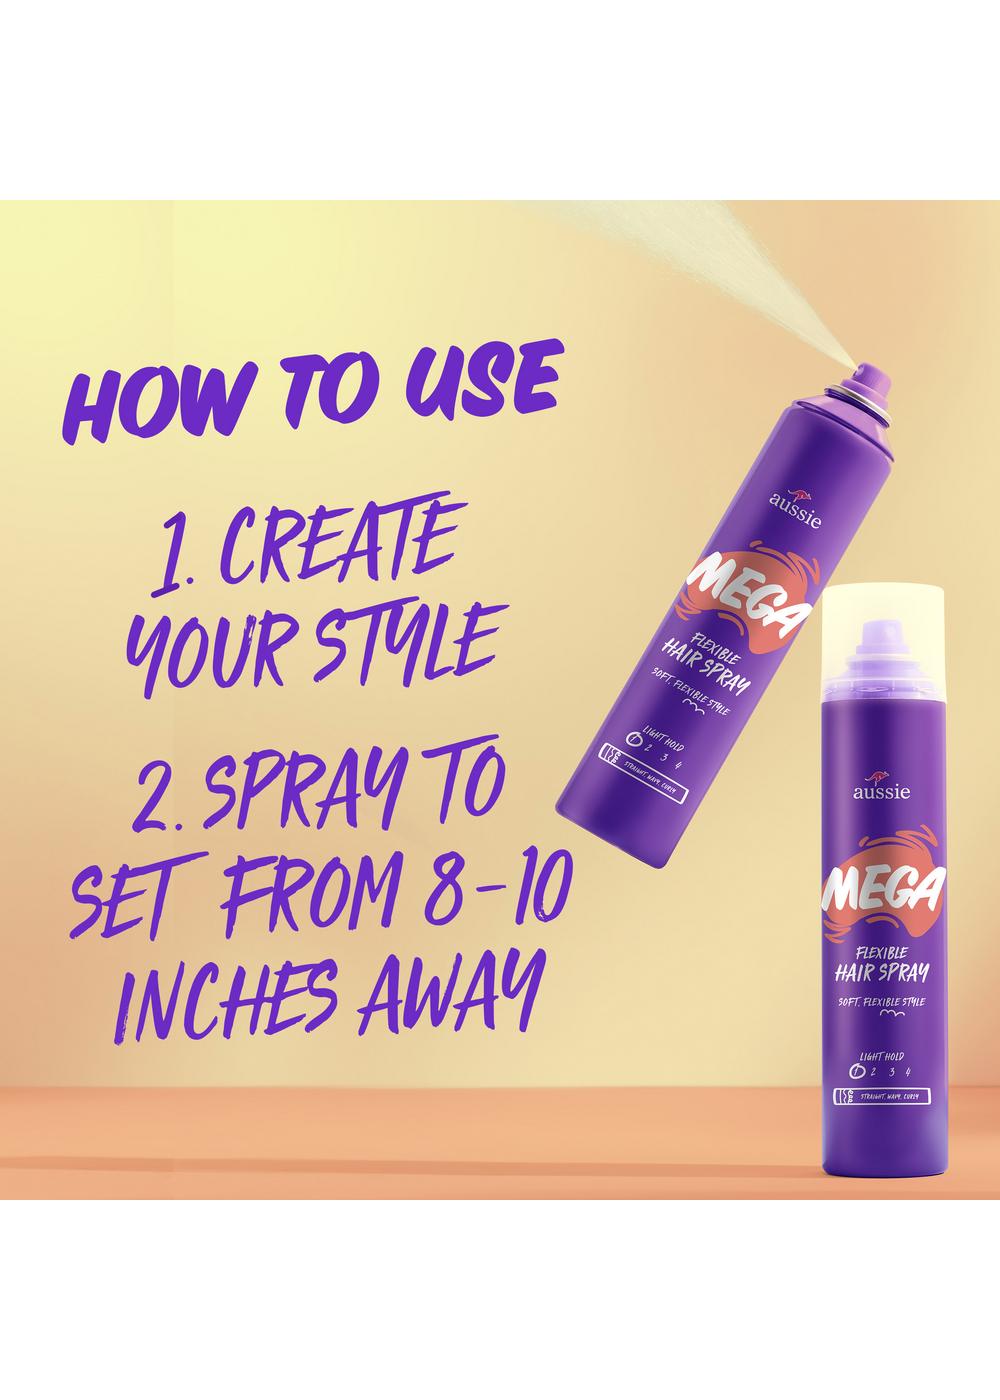 Aussie Mega Flexible Hair Spray; image 7 of 10